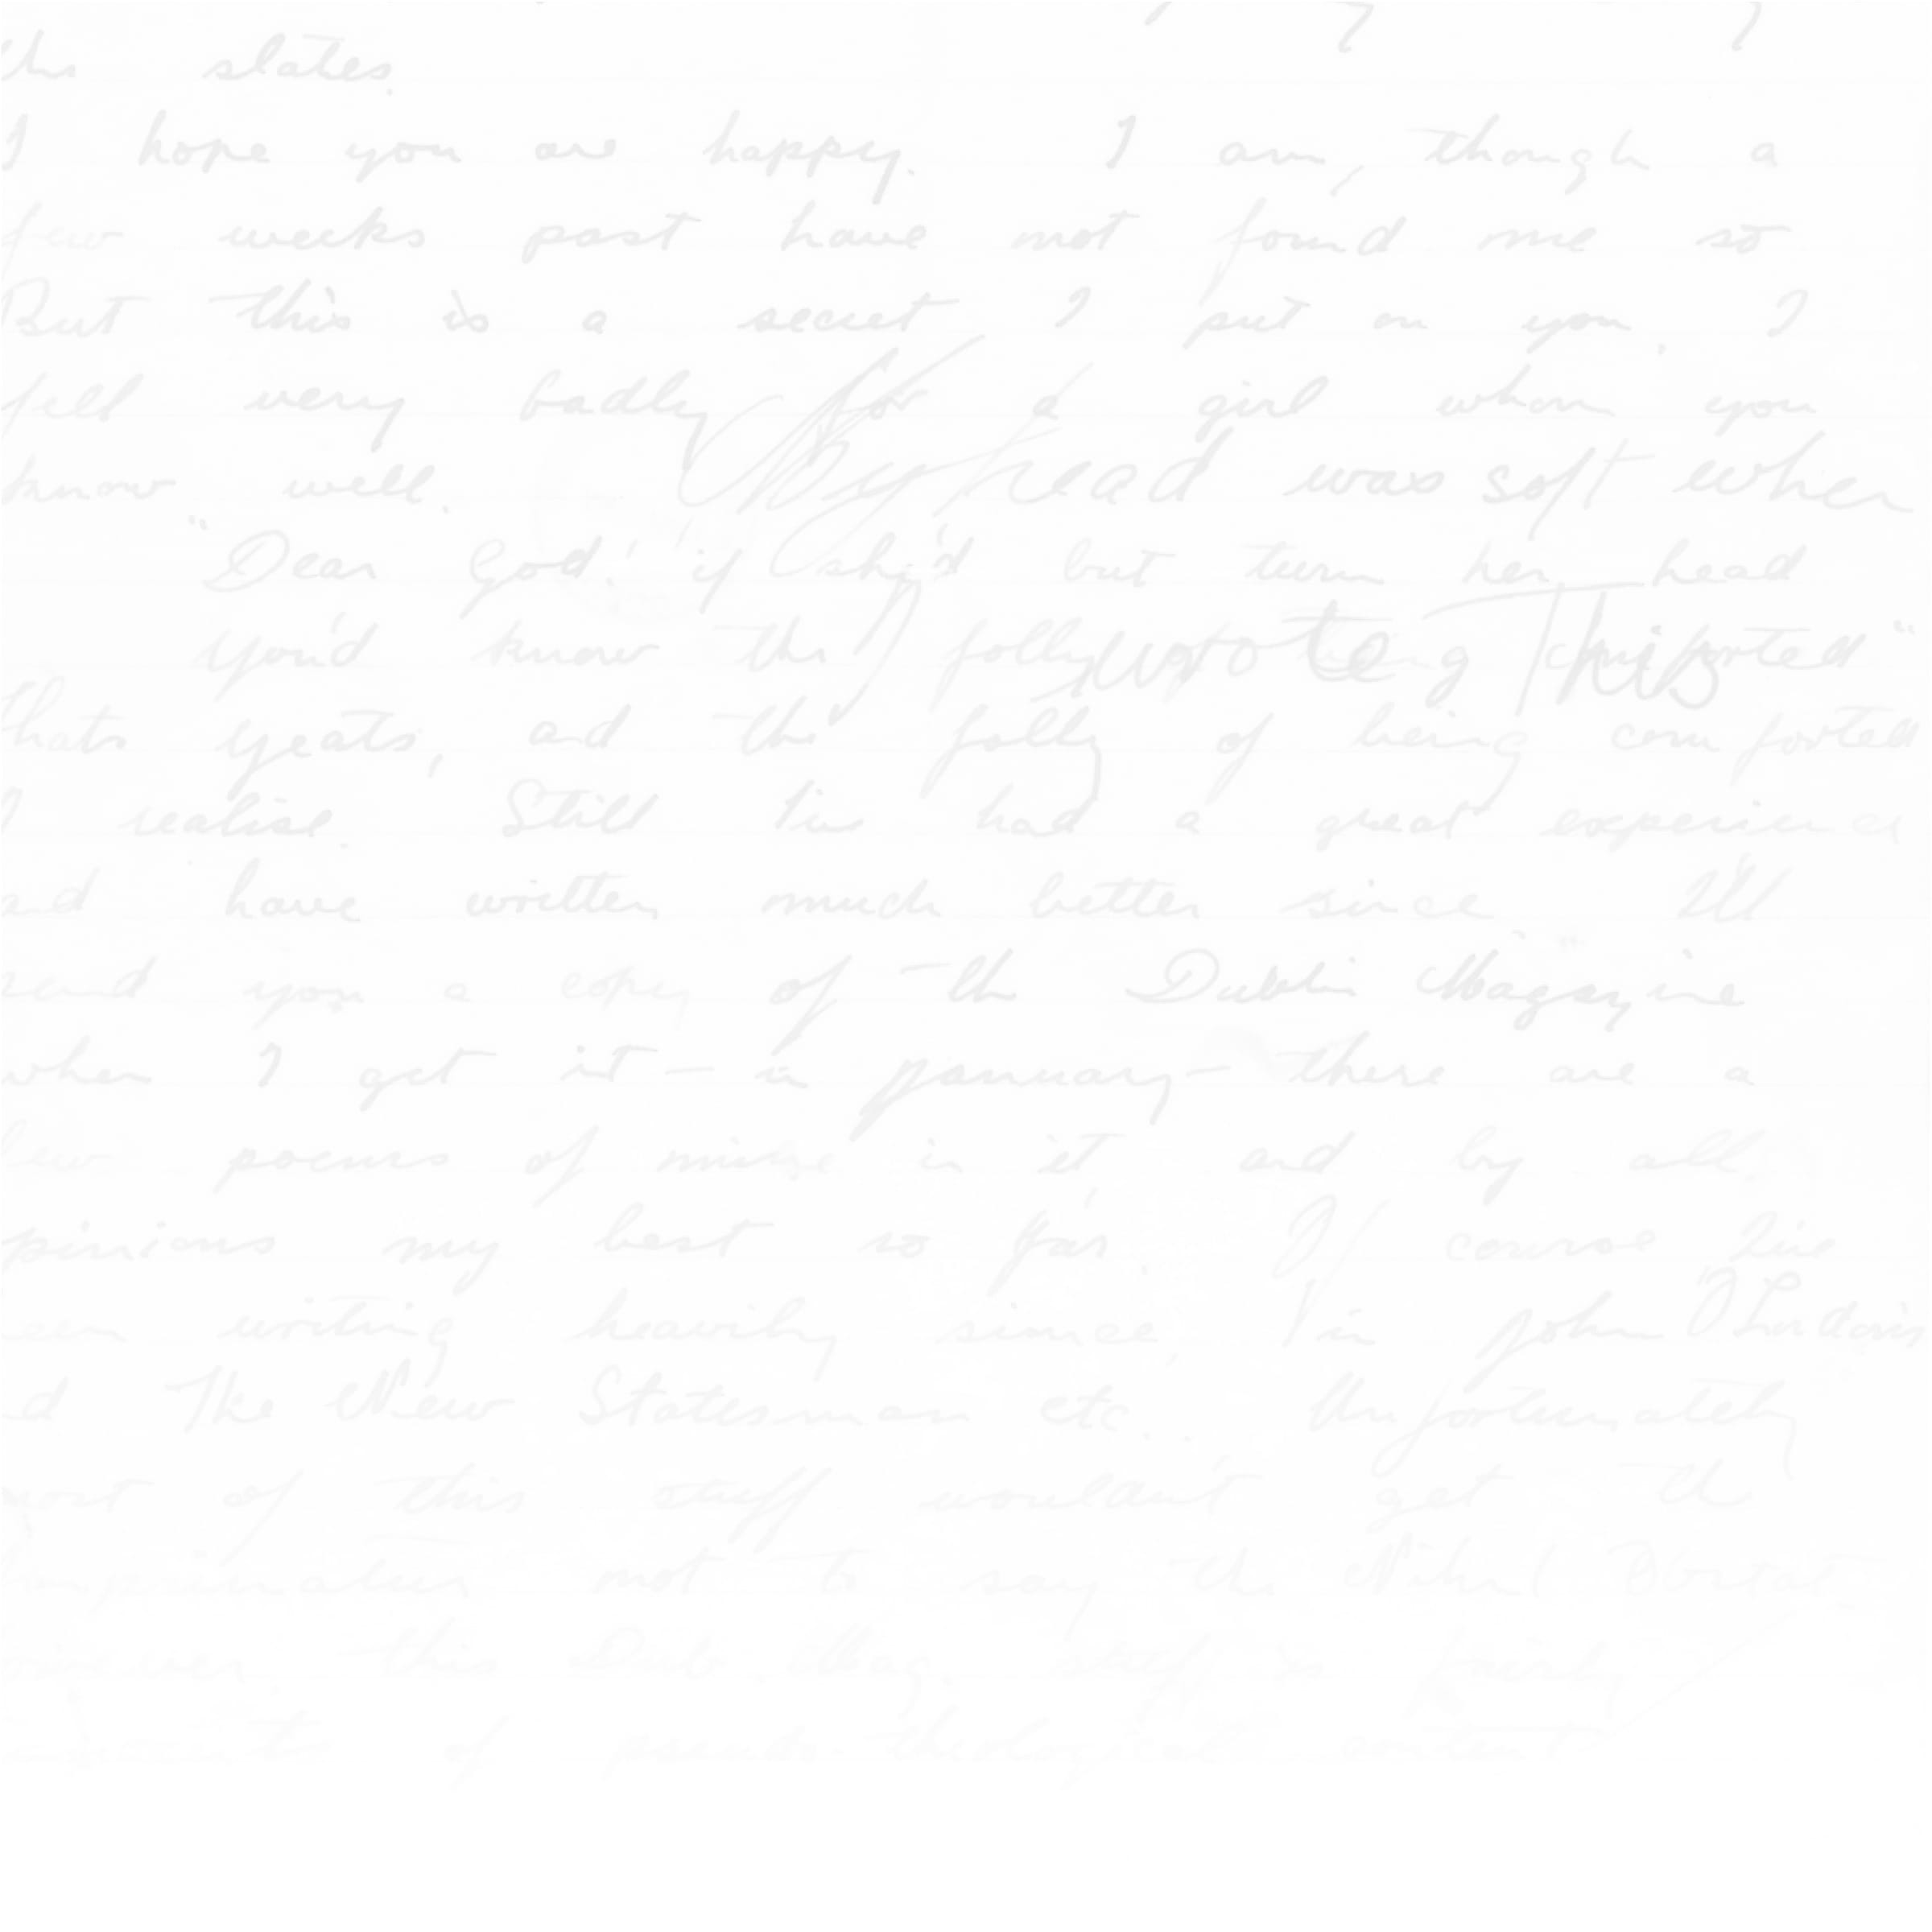 kavanagh-bg-handwritten_web.jpg